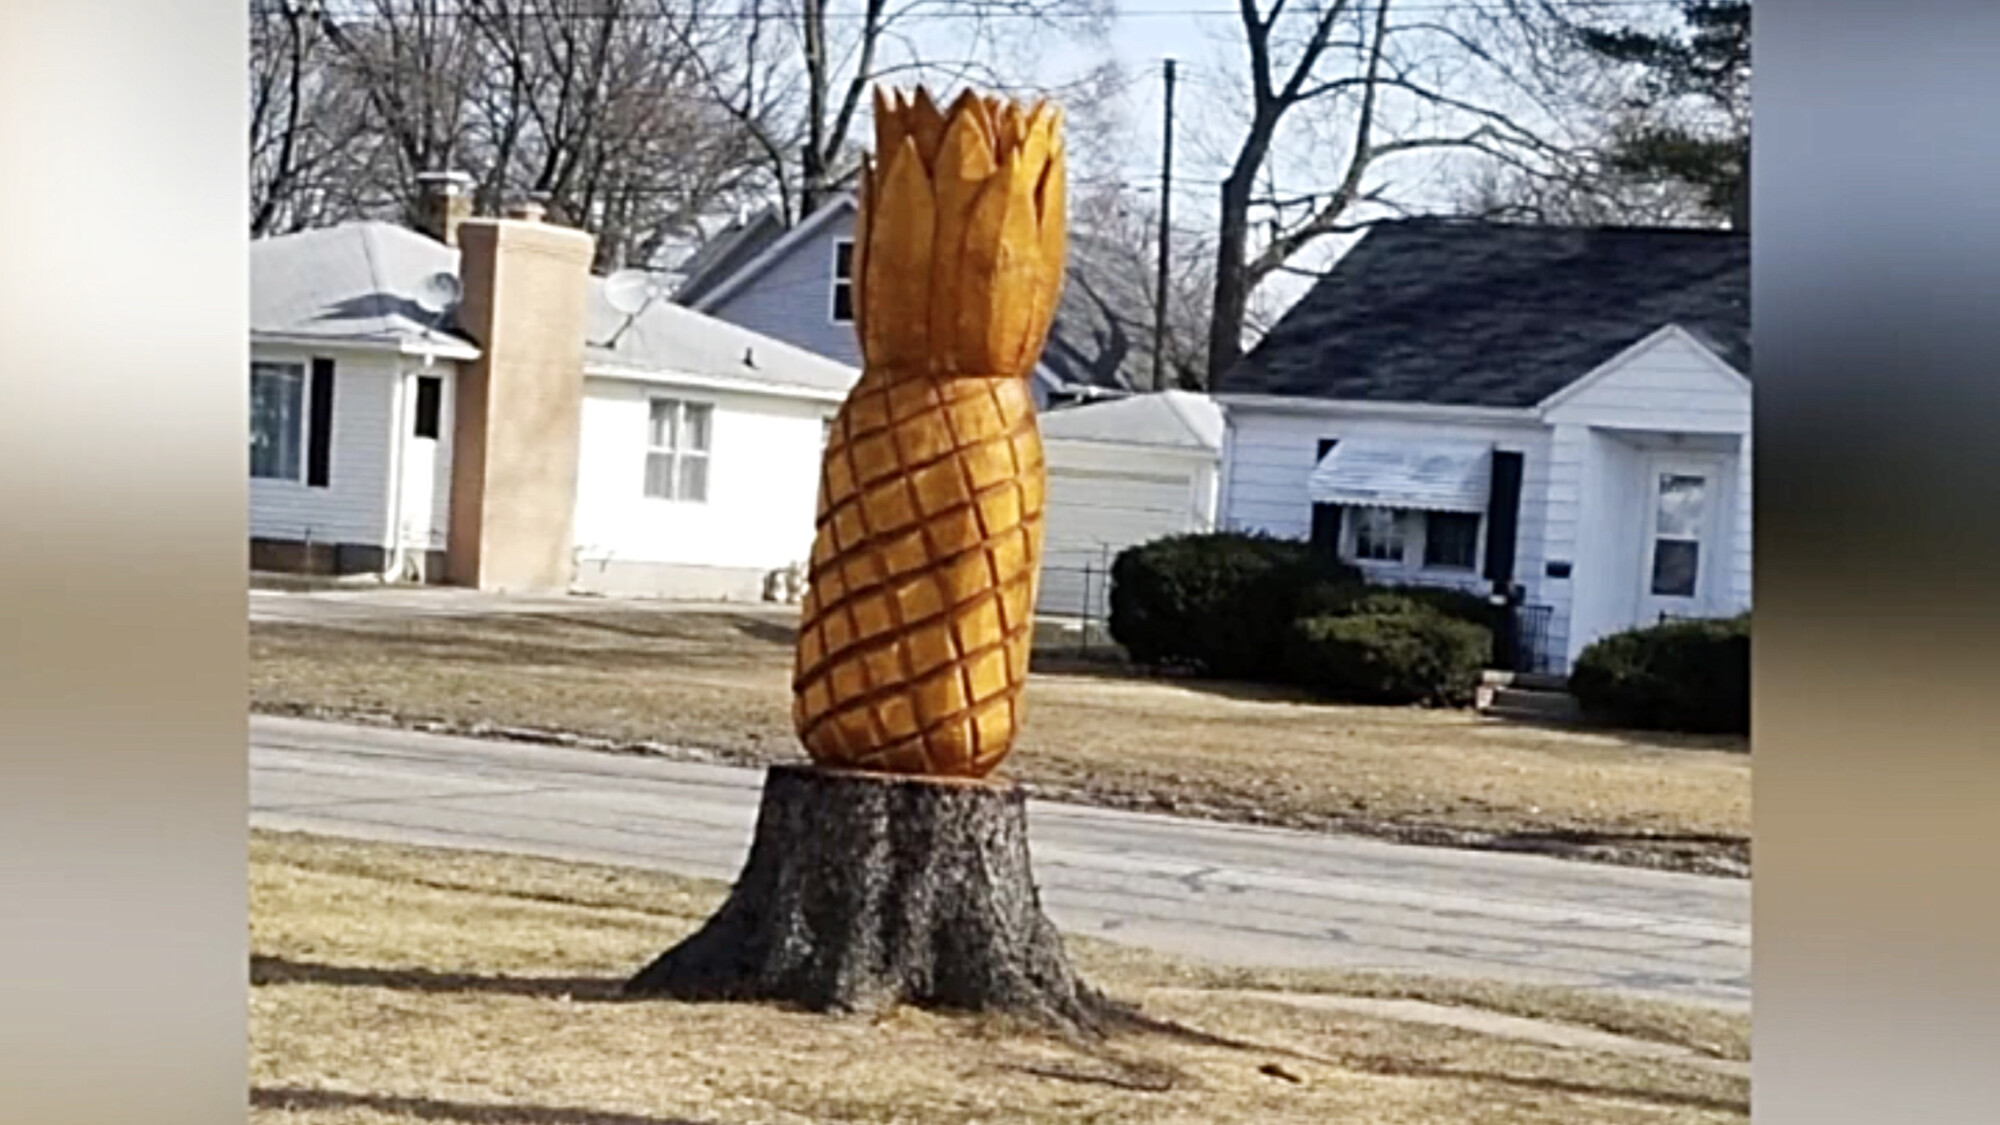 10-Foot-Tall Pineapple Sculpture in Michigan